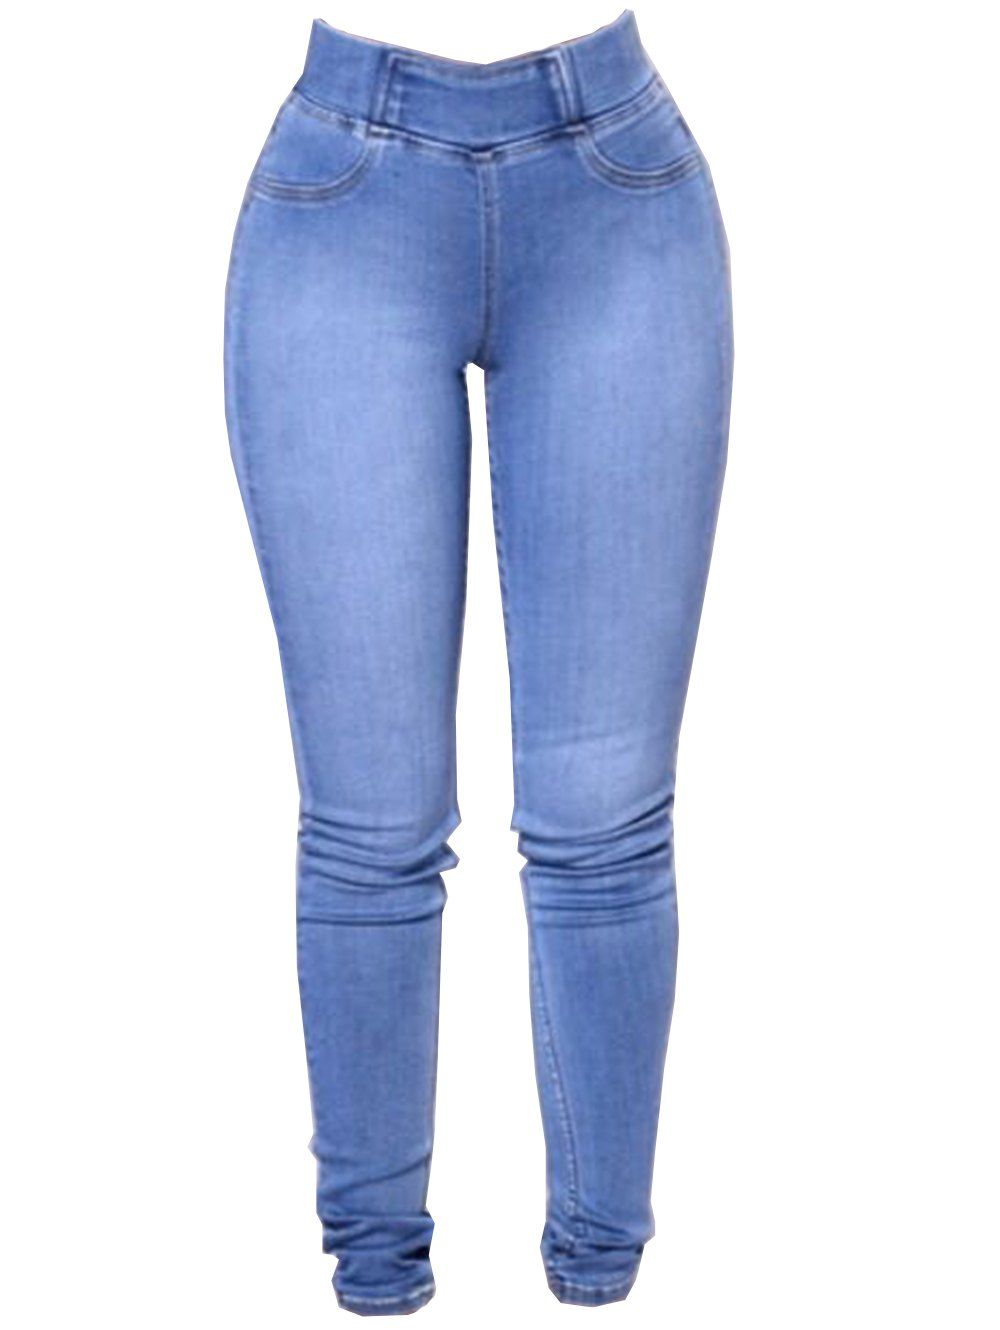 Womens Fashion Slim Fit Stretchy Skinny Jeans Bleu clair XL